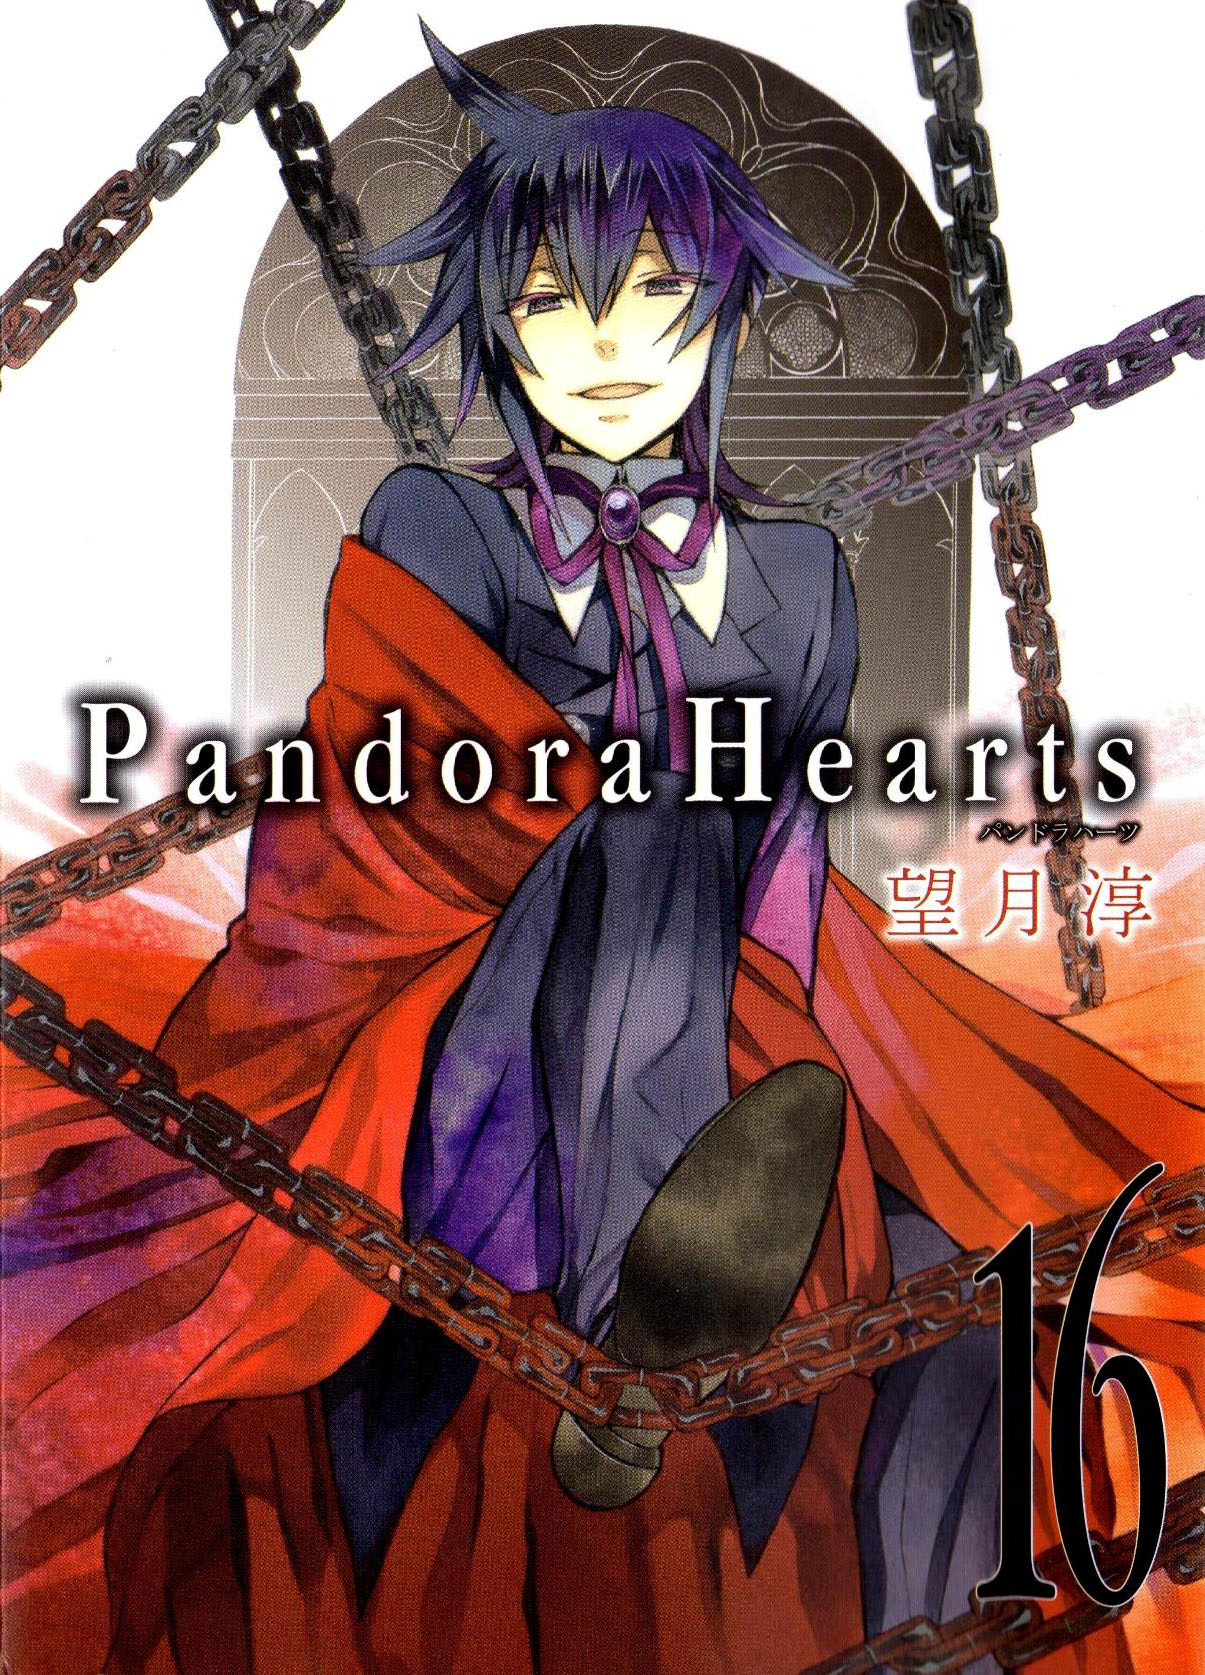 Vanitas, Pandora Hearts Wiki, Fandom